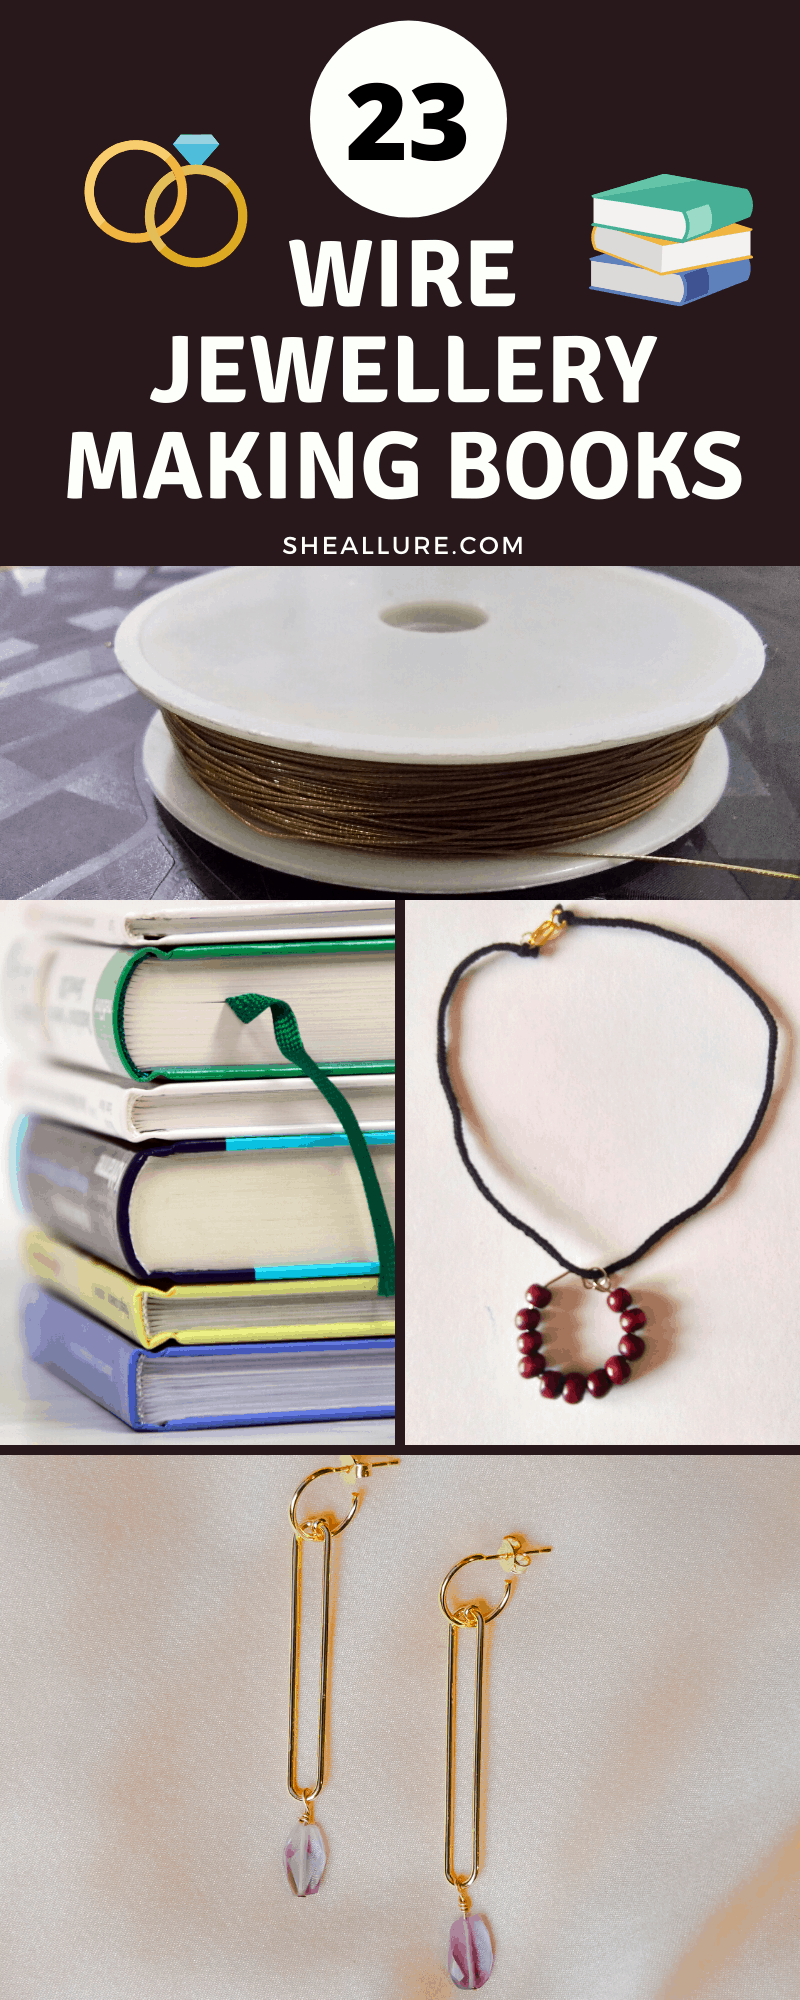 Wire Jewellery Making Books